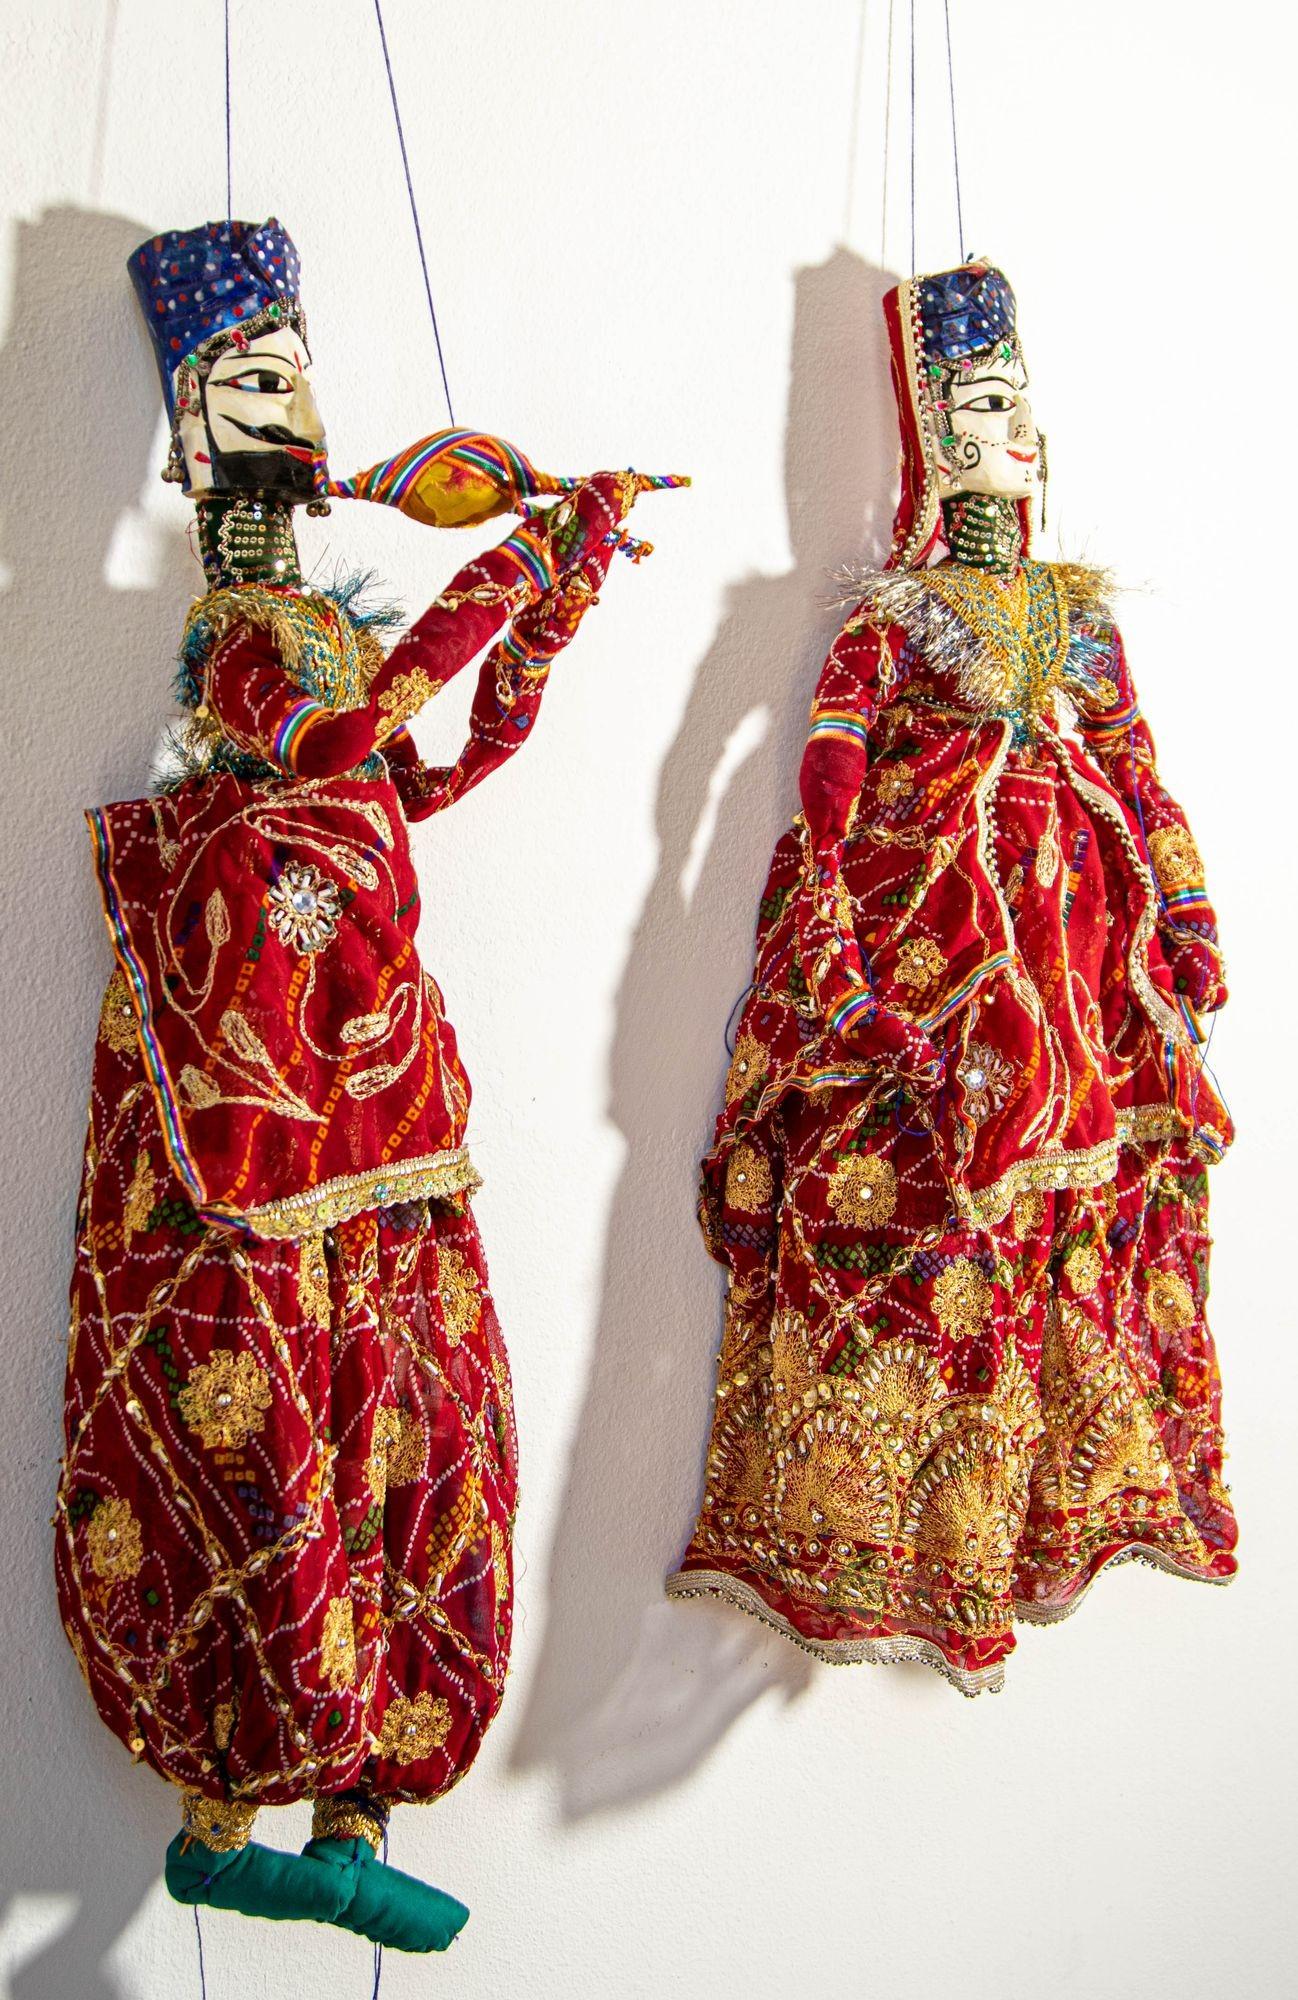 Folk Art Handmade Rajasthani Kathputli Dancing Puppet Couple Jaipur India 1950s For Sale